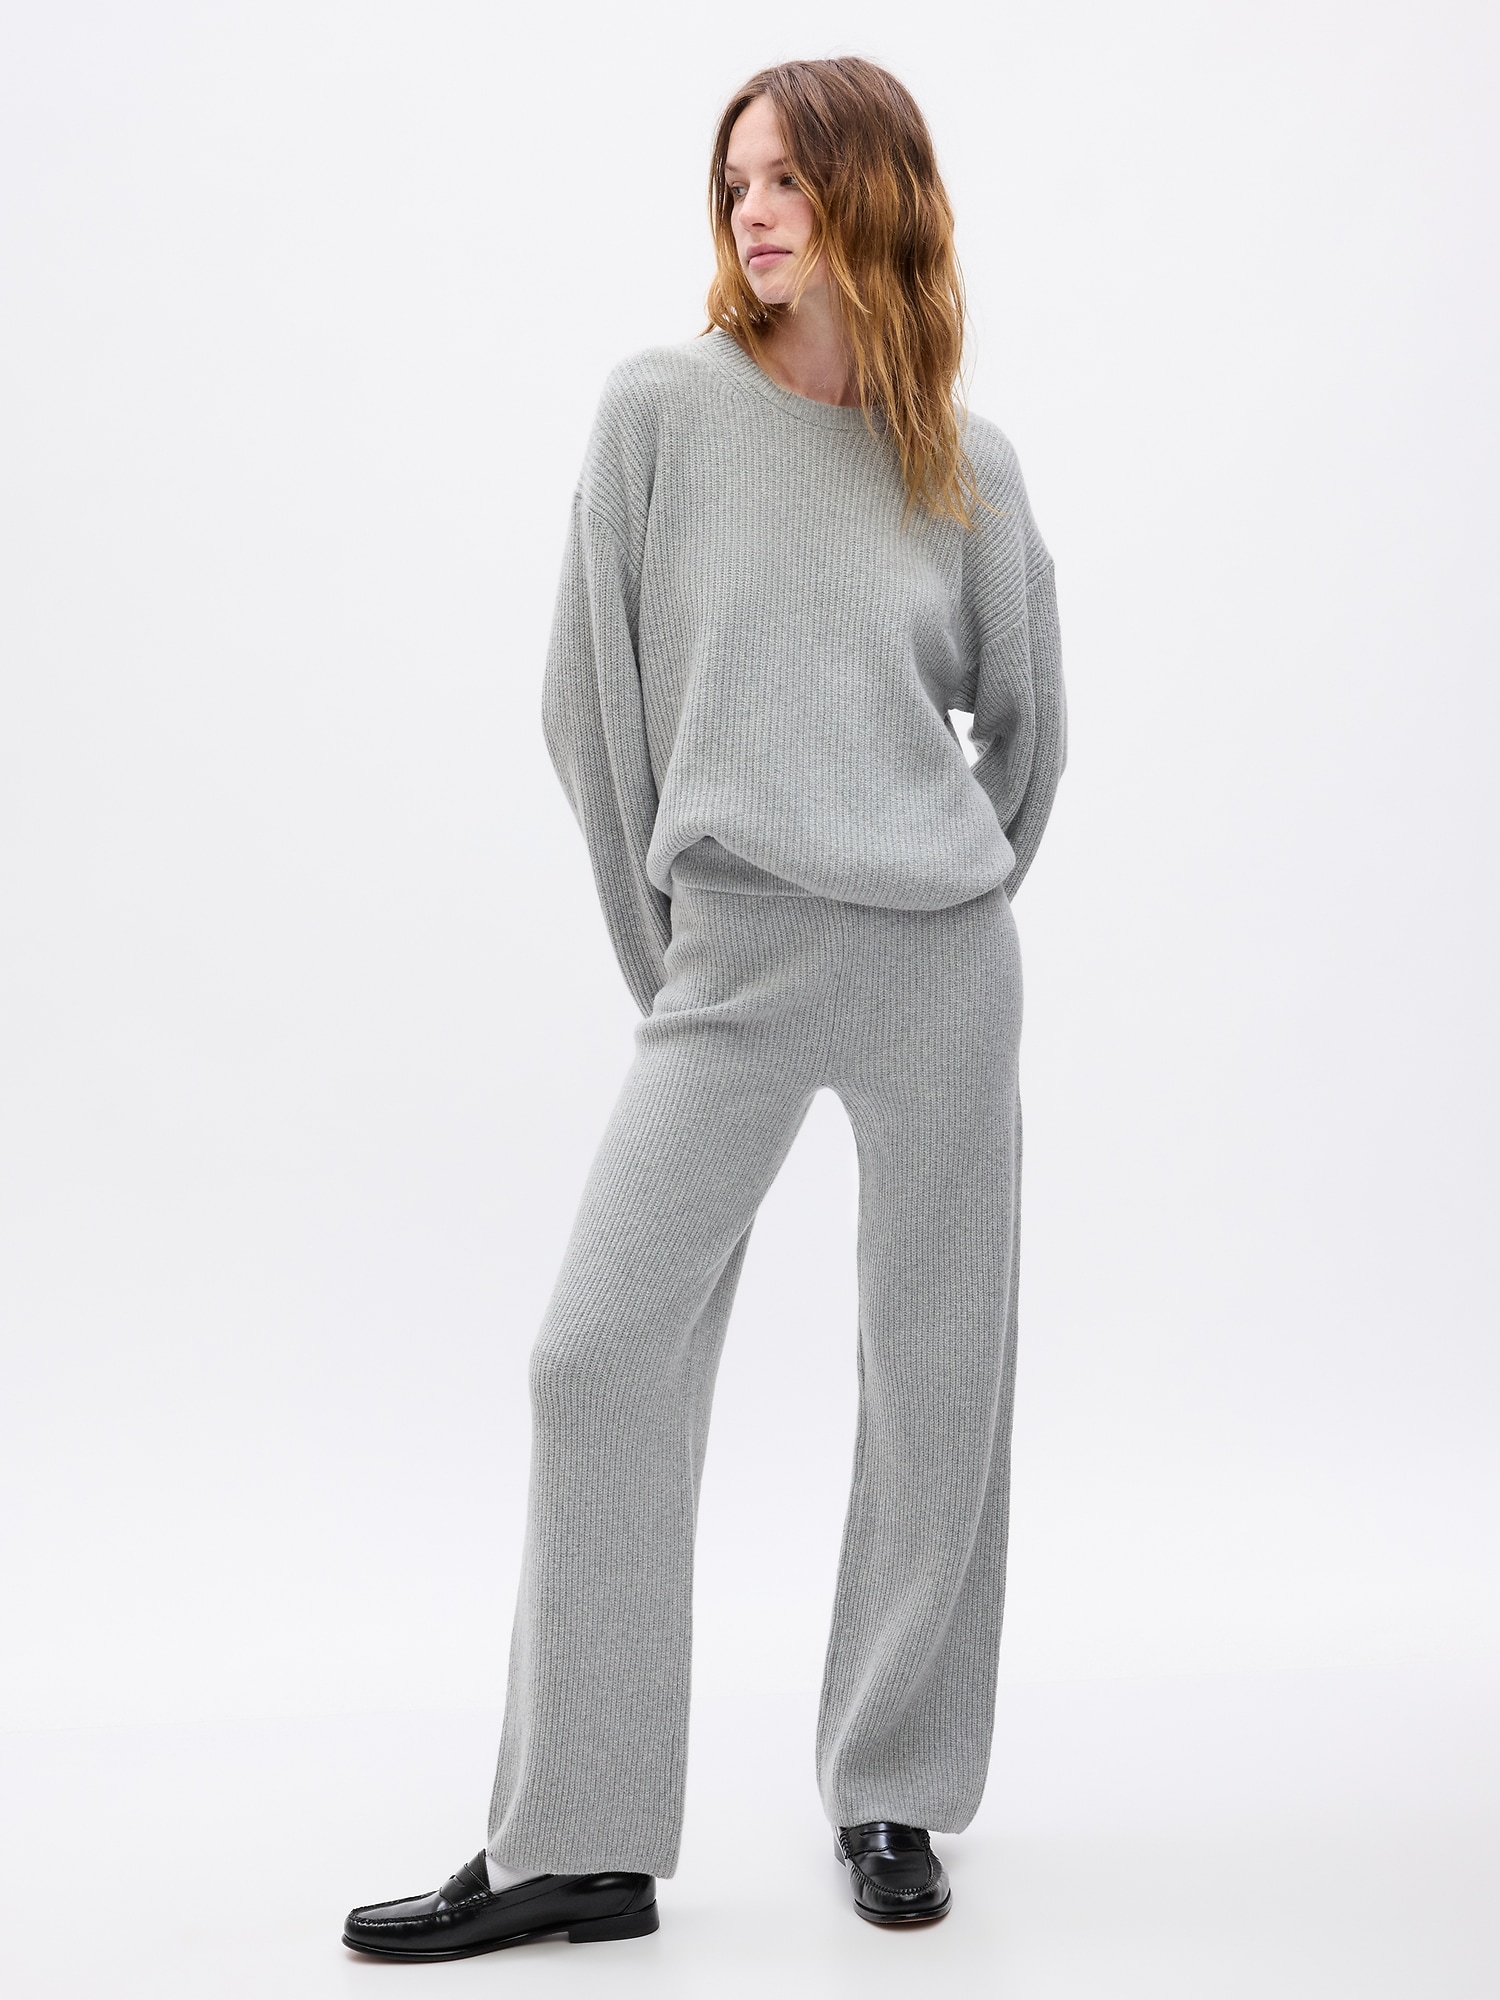 Women's Lightweight Sweater Fleece Pants | Pajamas & Nightgowns at L.L.Bean